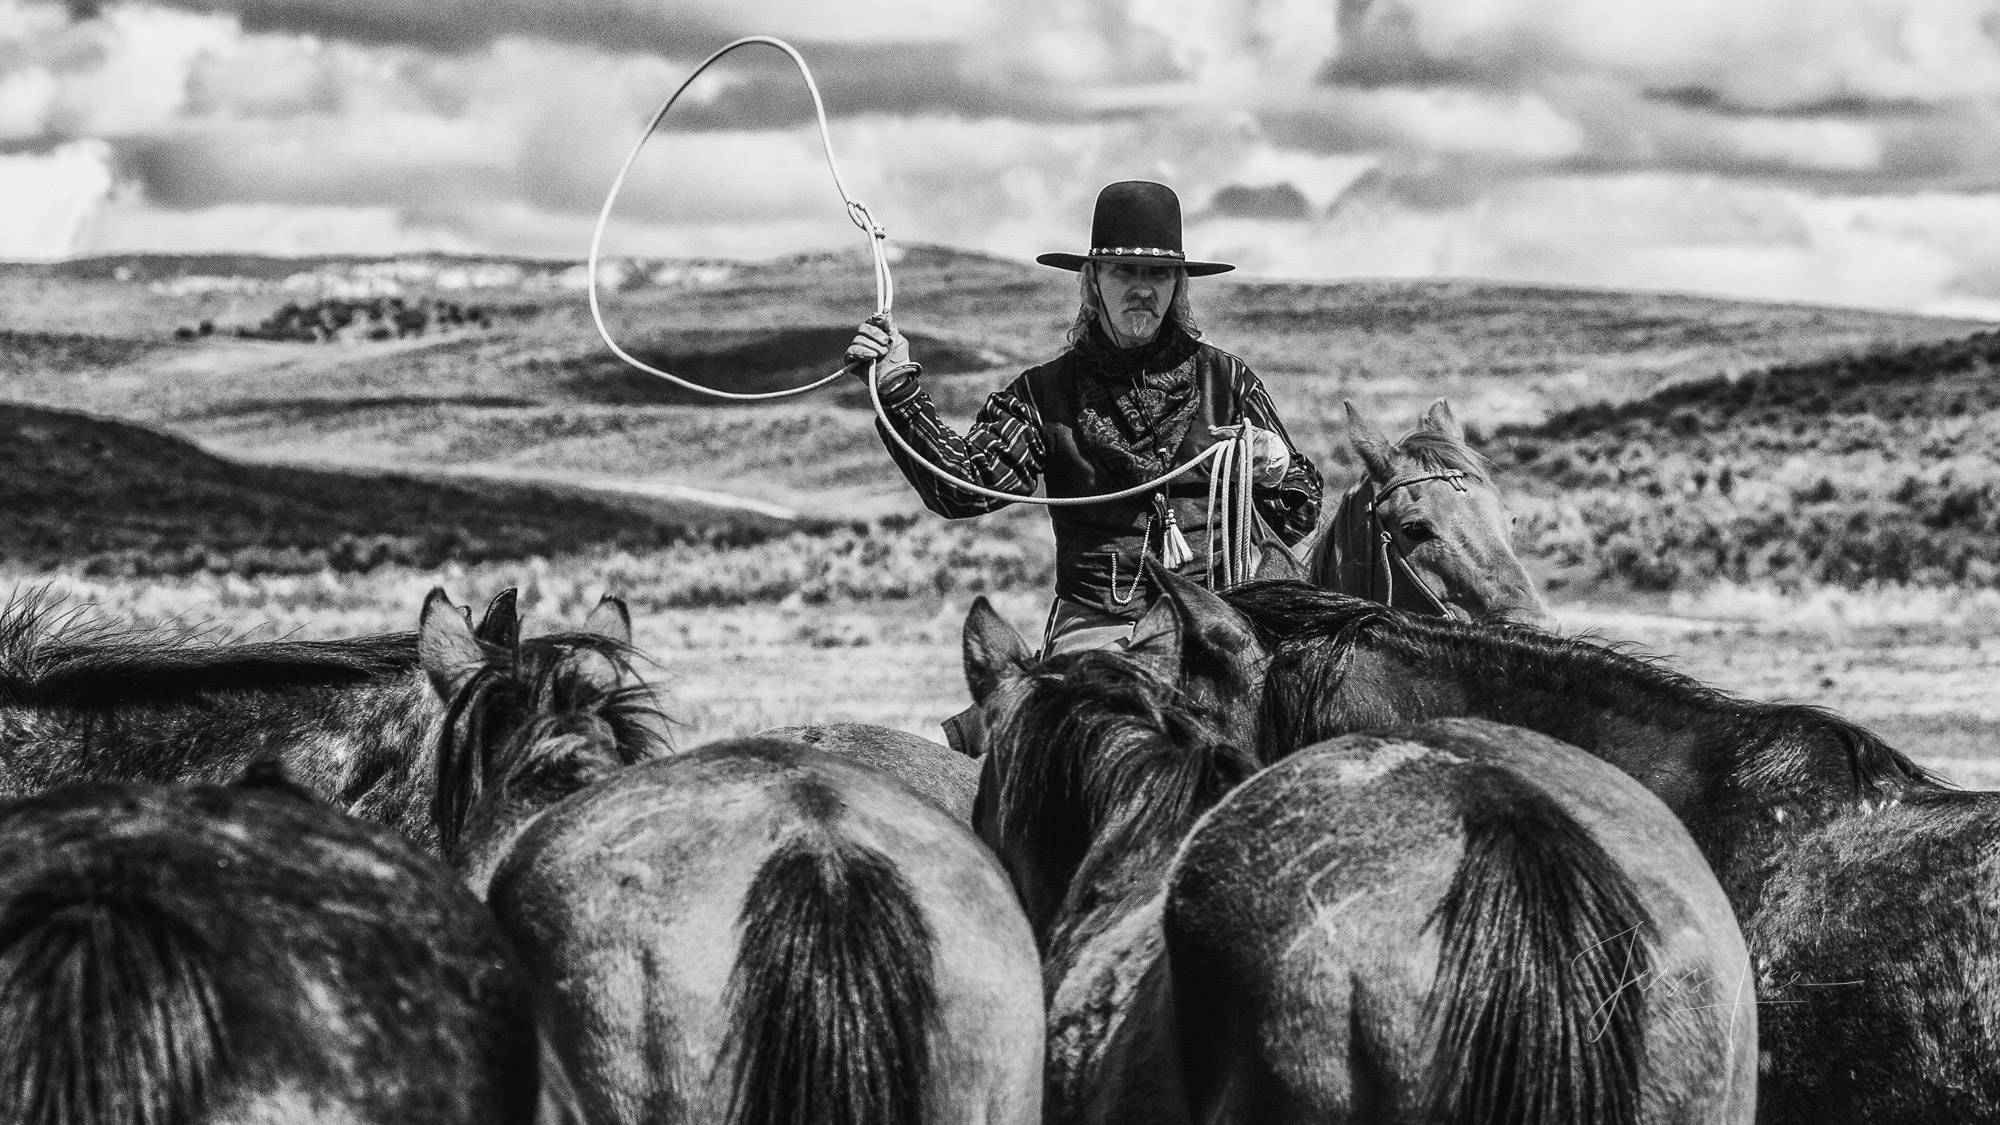 Cowboy Photos, Cowgirl Photos, Horse Photography, Black and White Photography, Western Photos